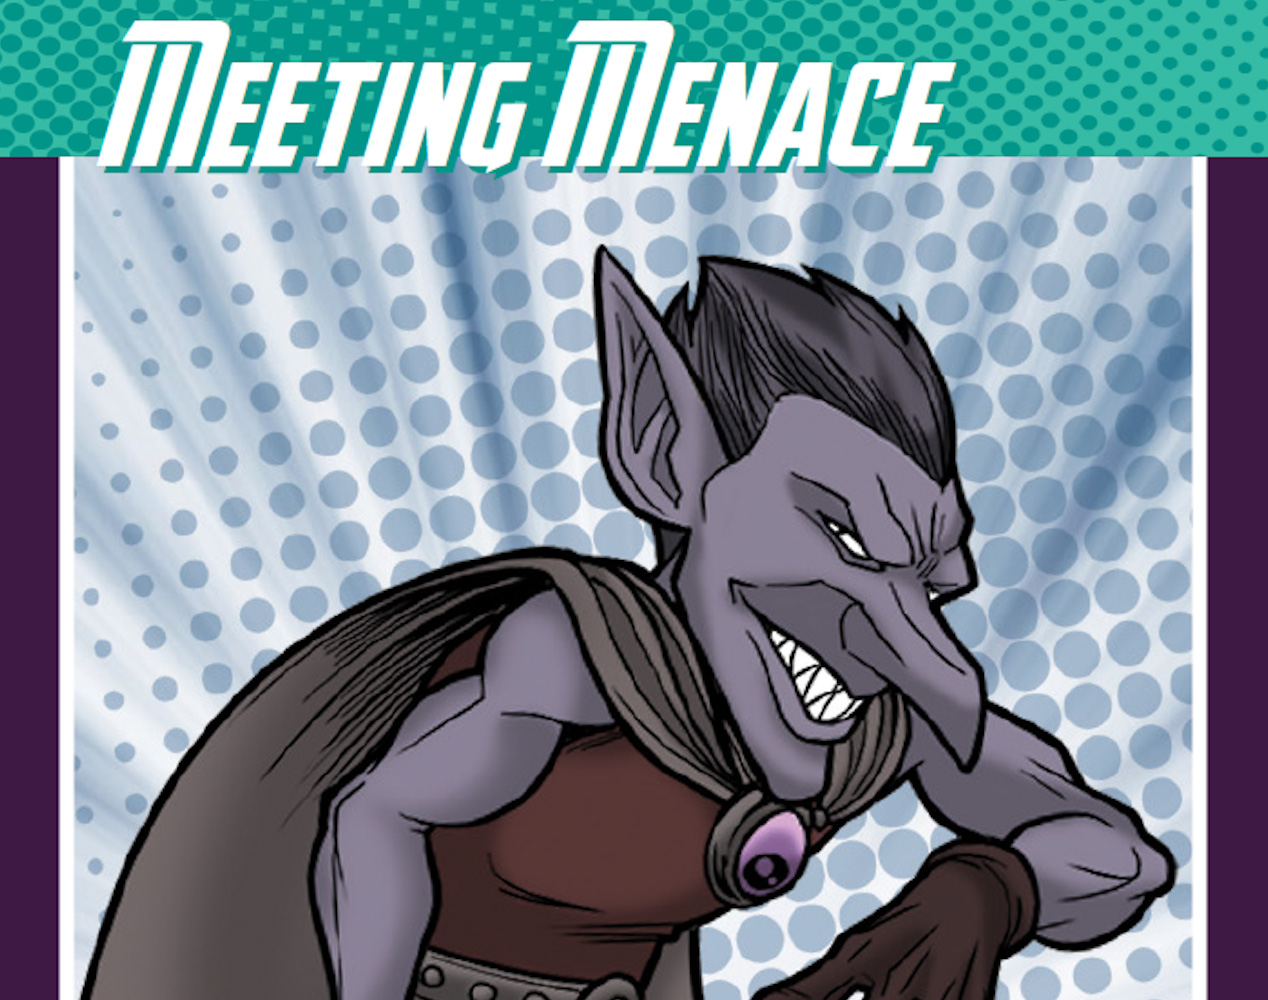 The Meeting Menace